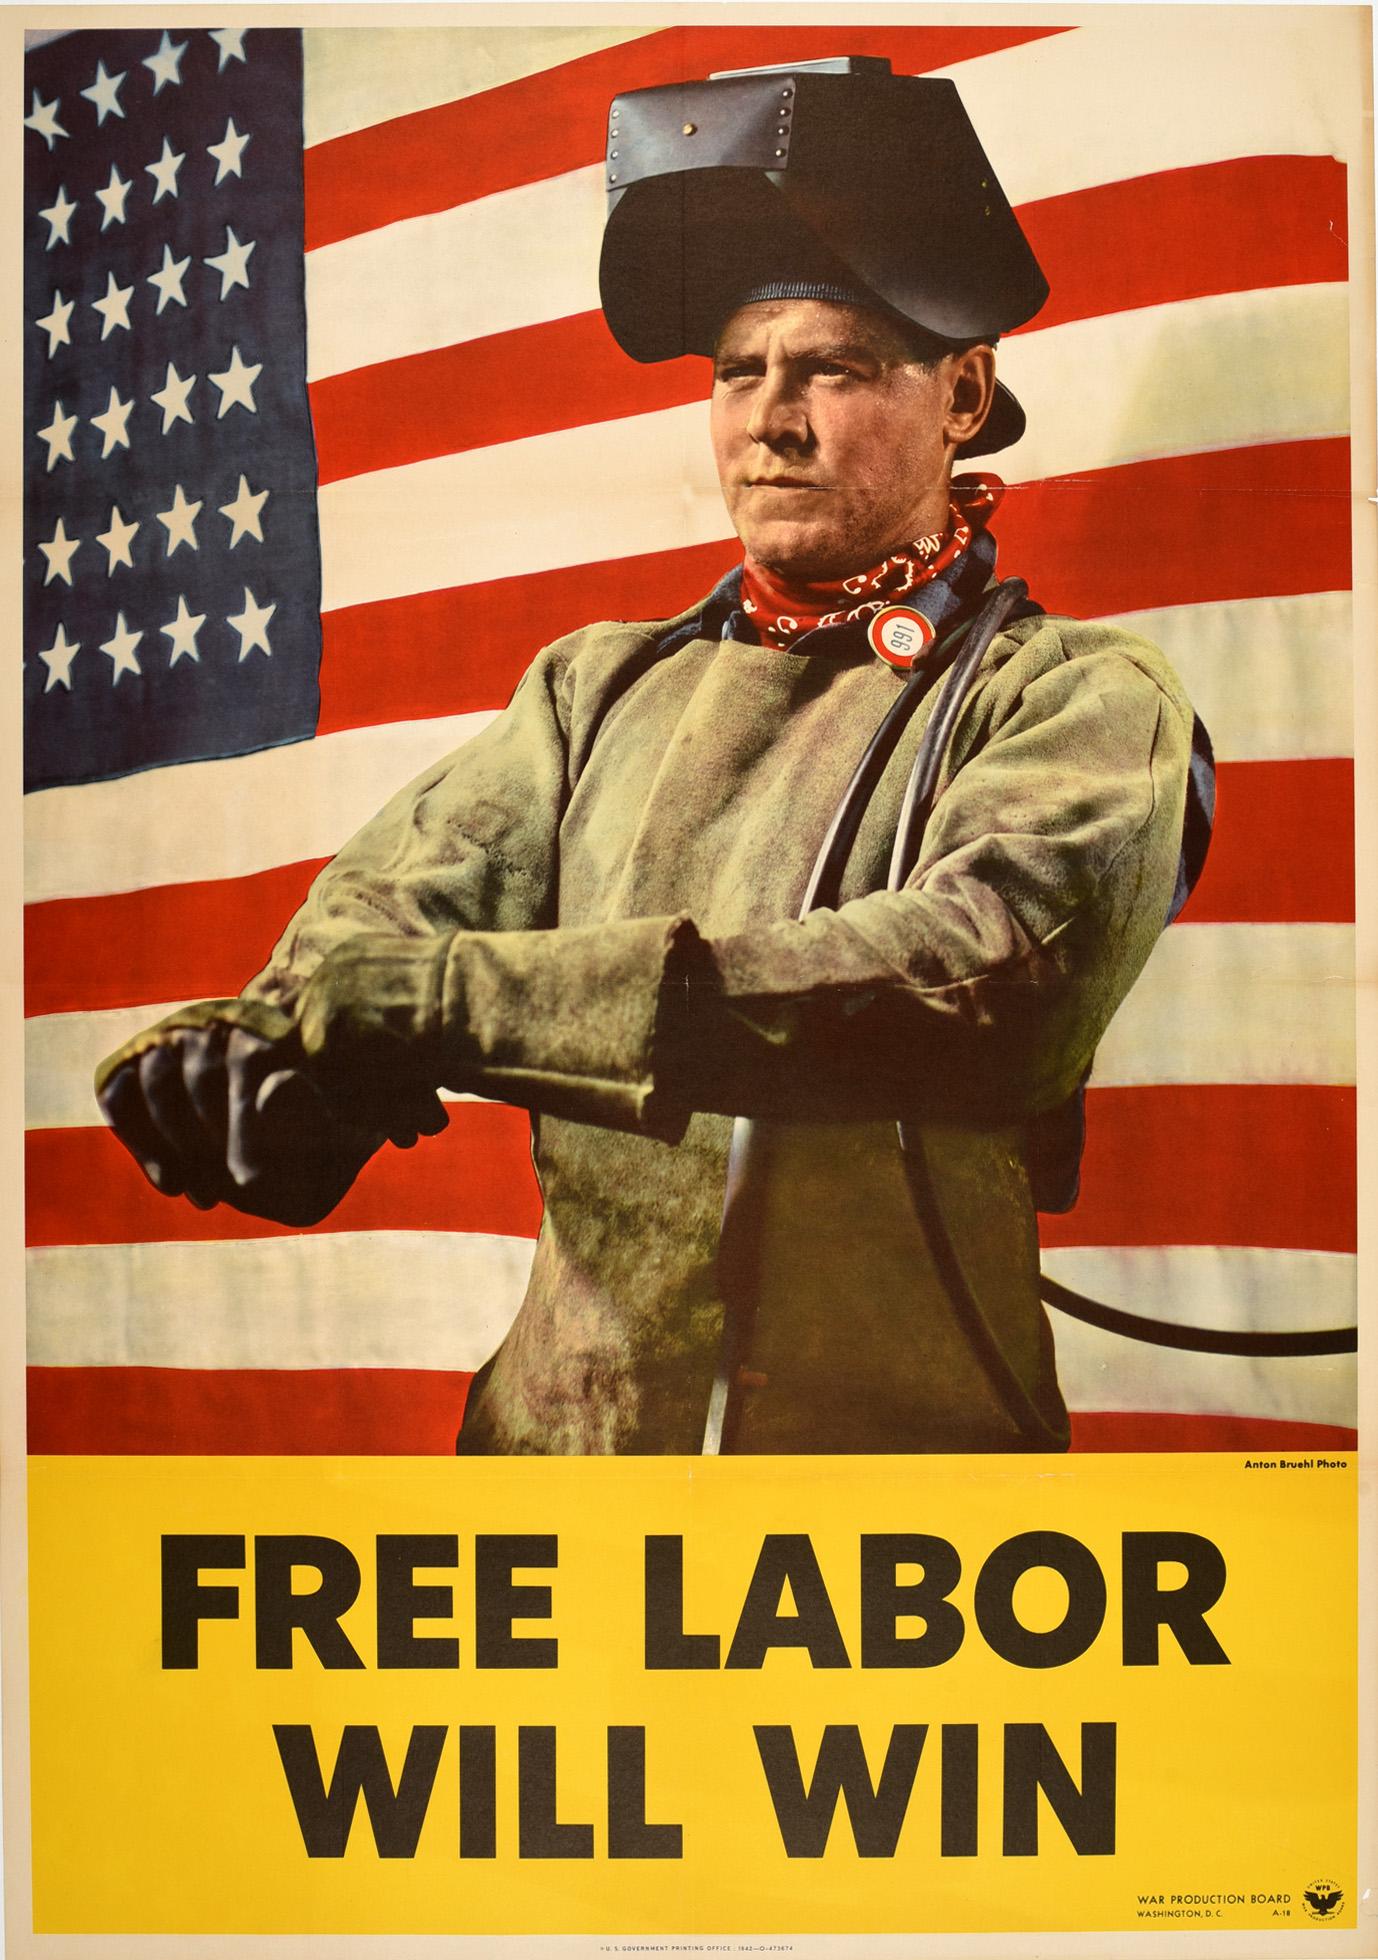 Anton Bruehl Print - Original Vintage Poster Free Labor Will Win WWII Home Front Propaganda USA Flag